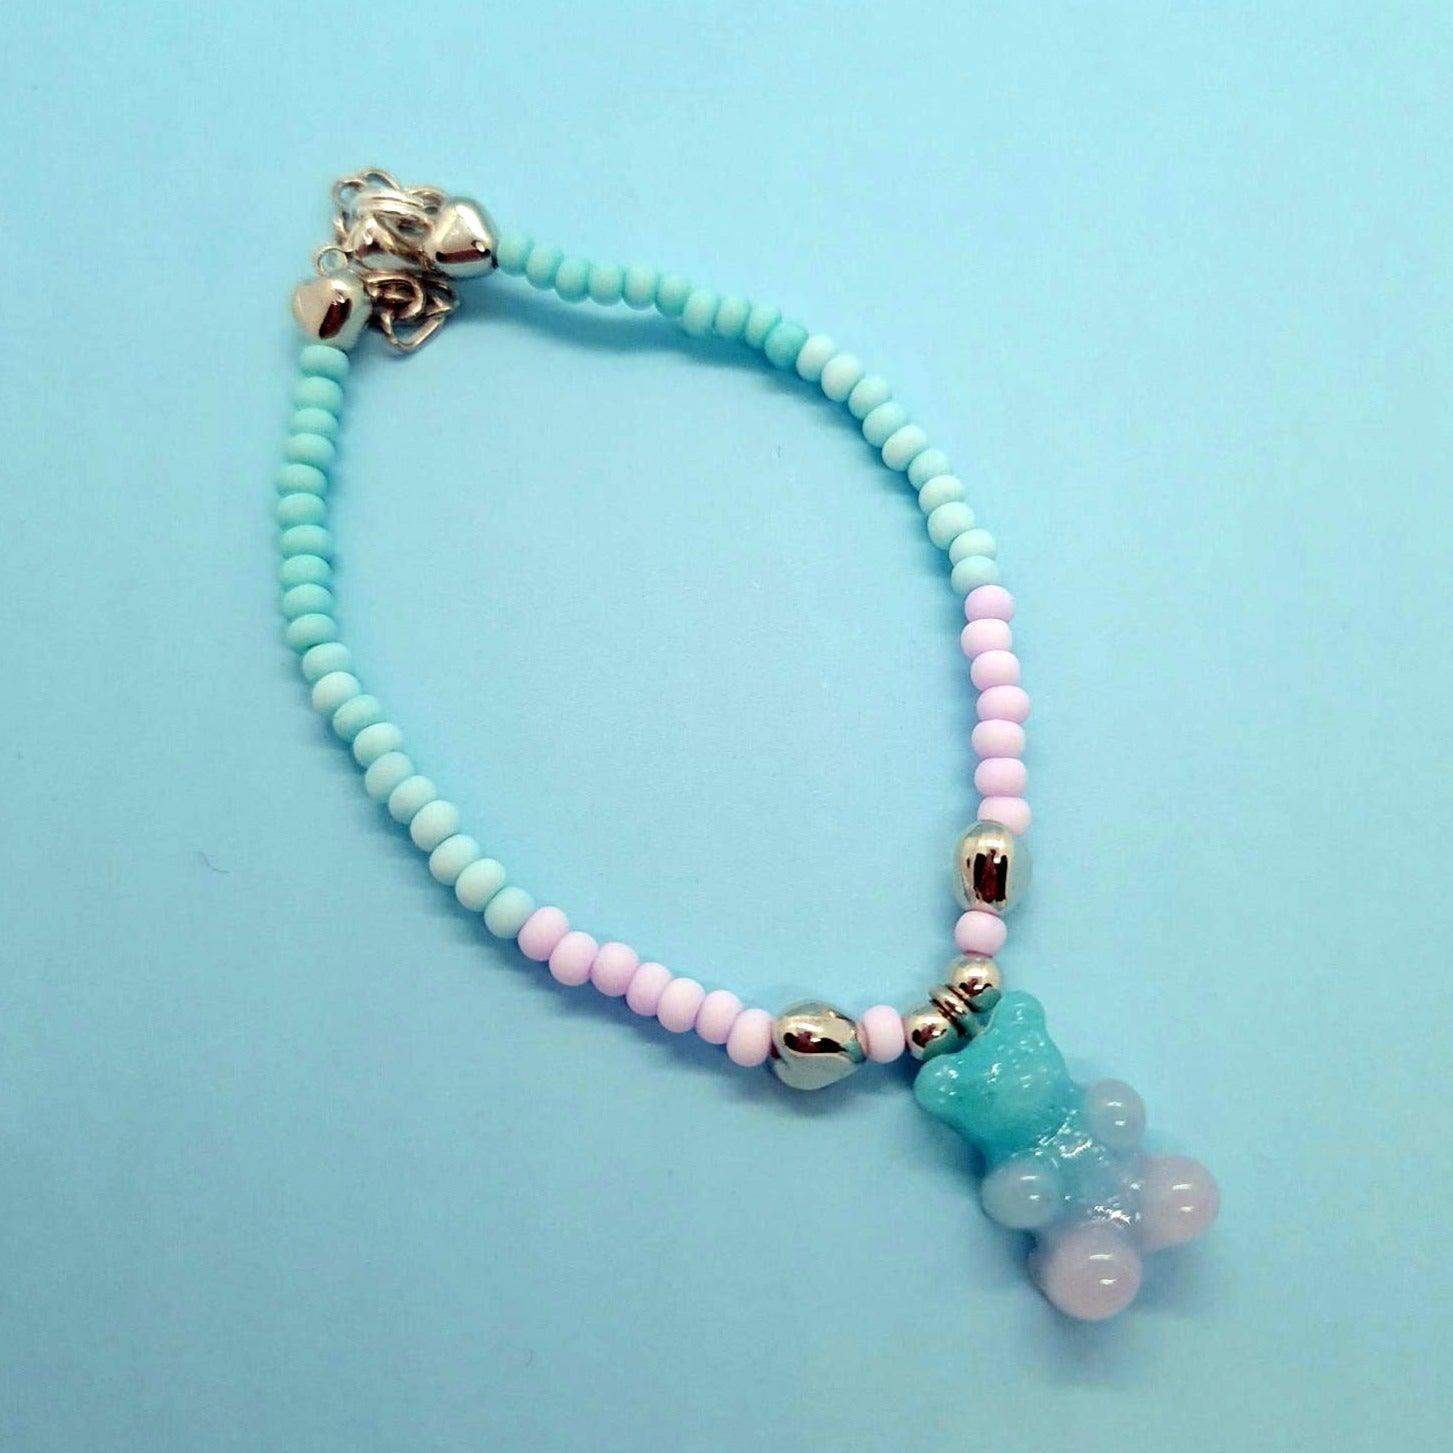 Gummy bear charm bracelet - Strawberry Moon Jewellery 